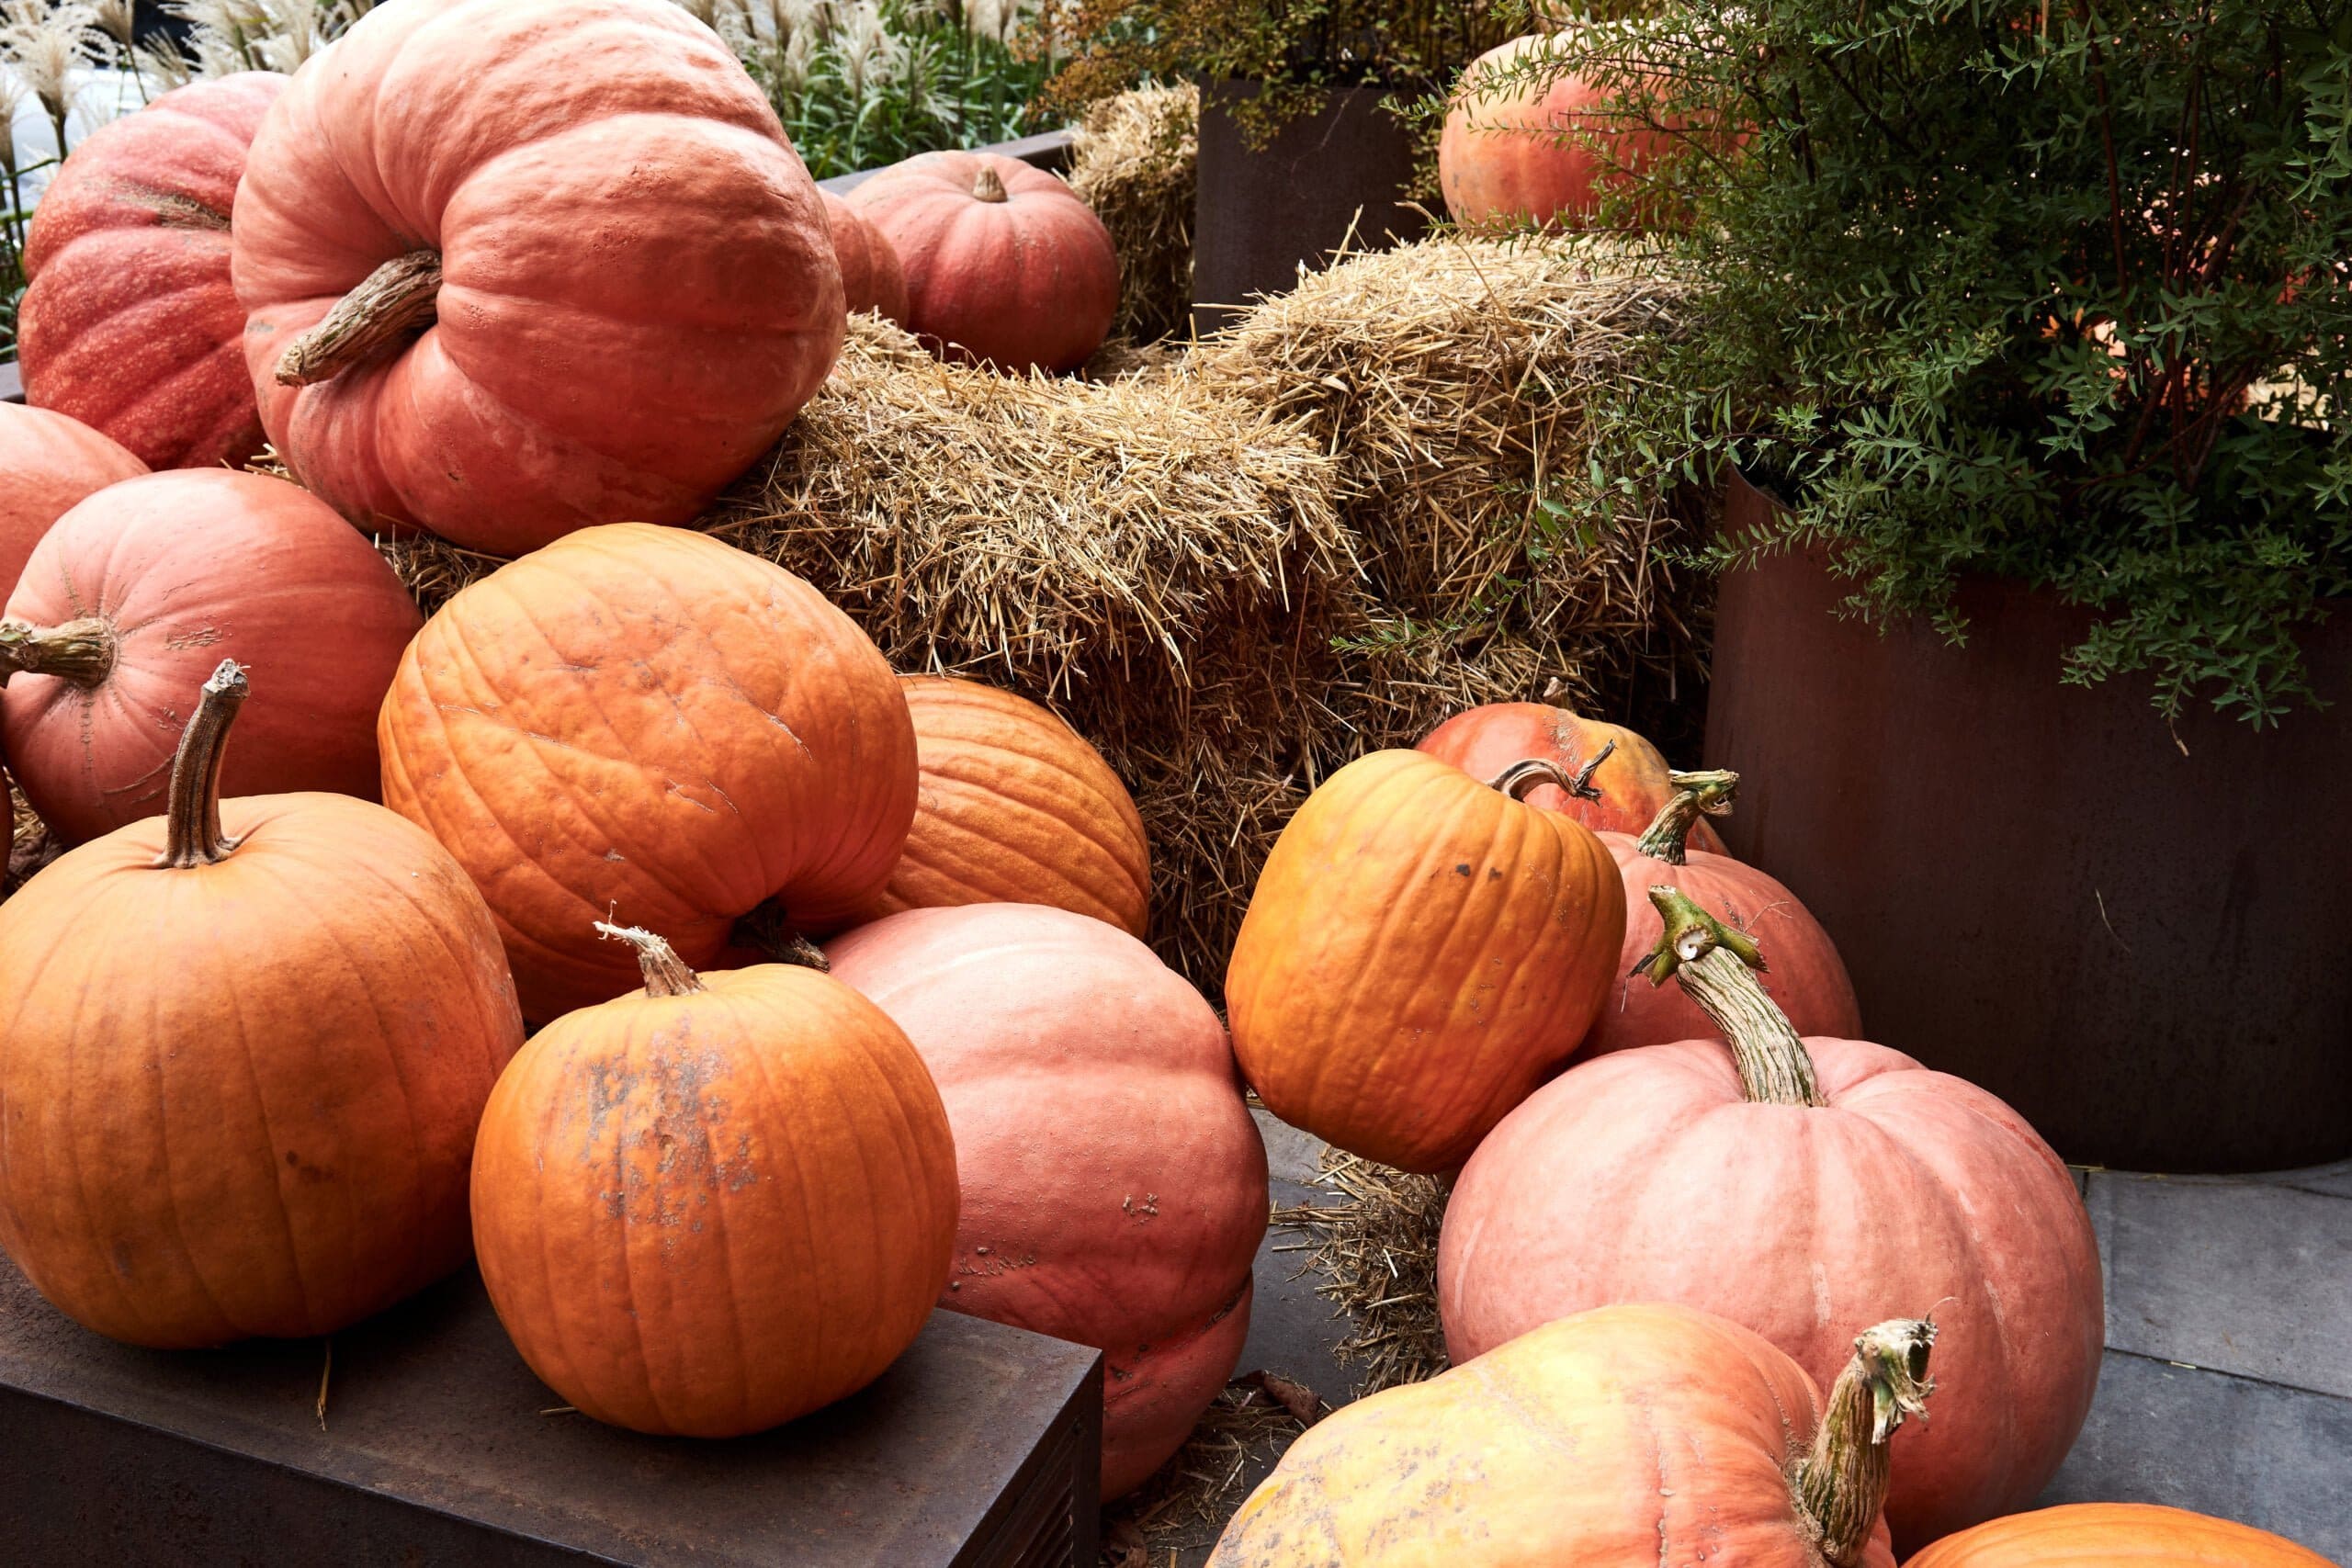 decorative-pumpkins-farm-market-stands-sheaves-hay-thanksgiving-holiday-season-halloween-decor